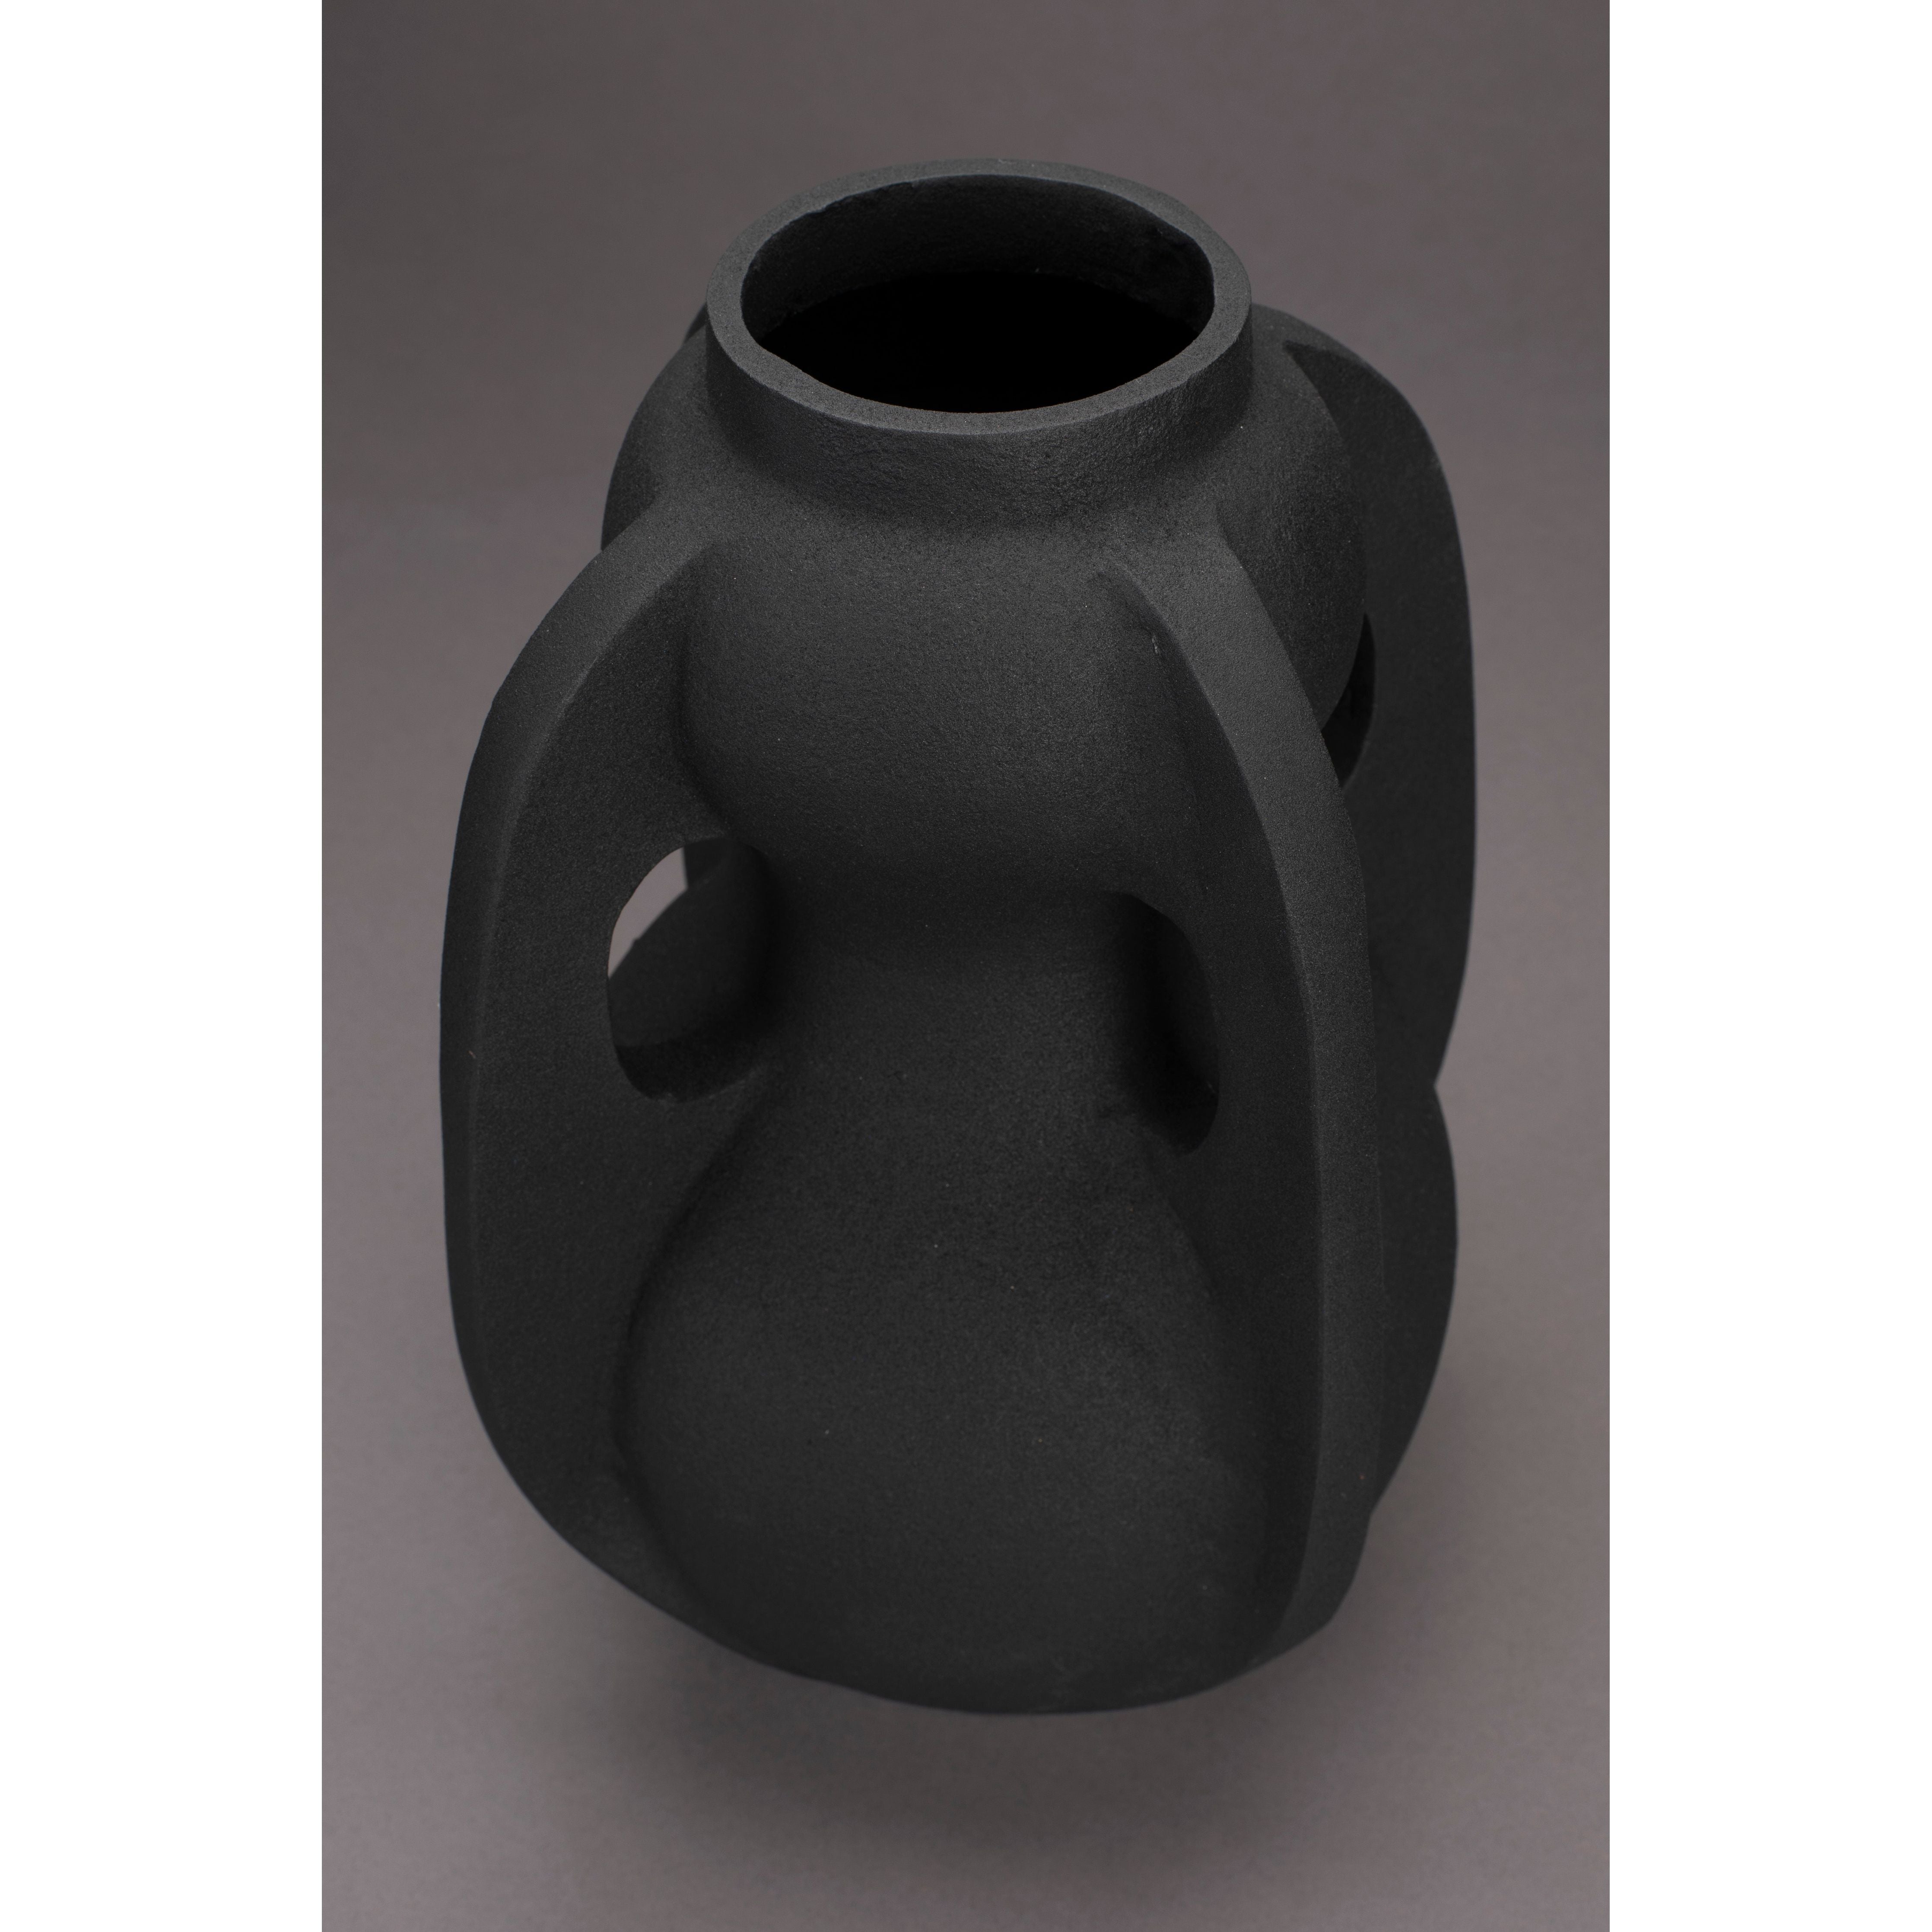 Vase thiago l black